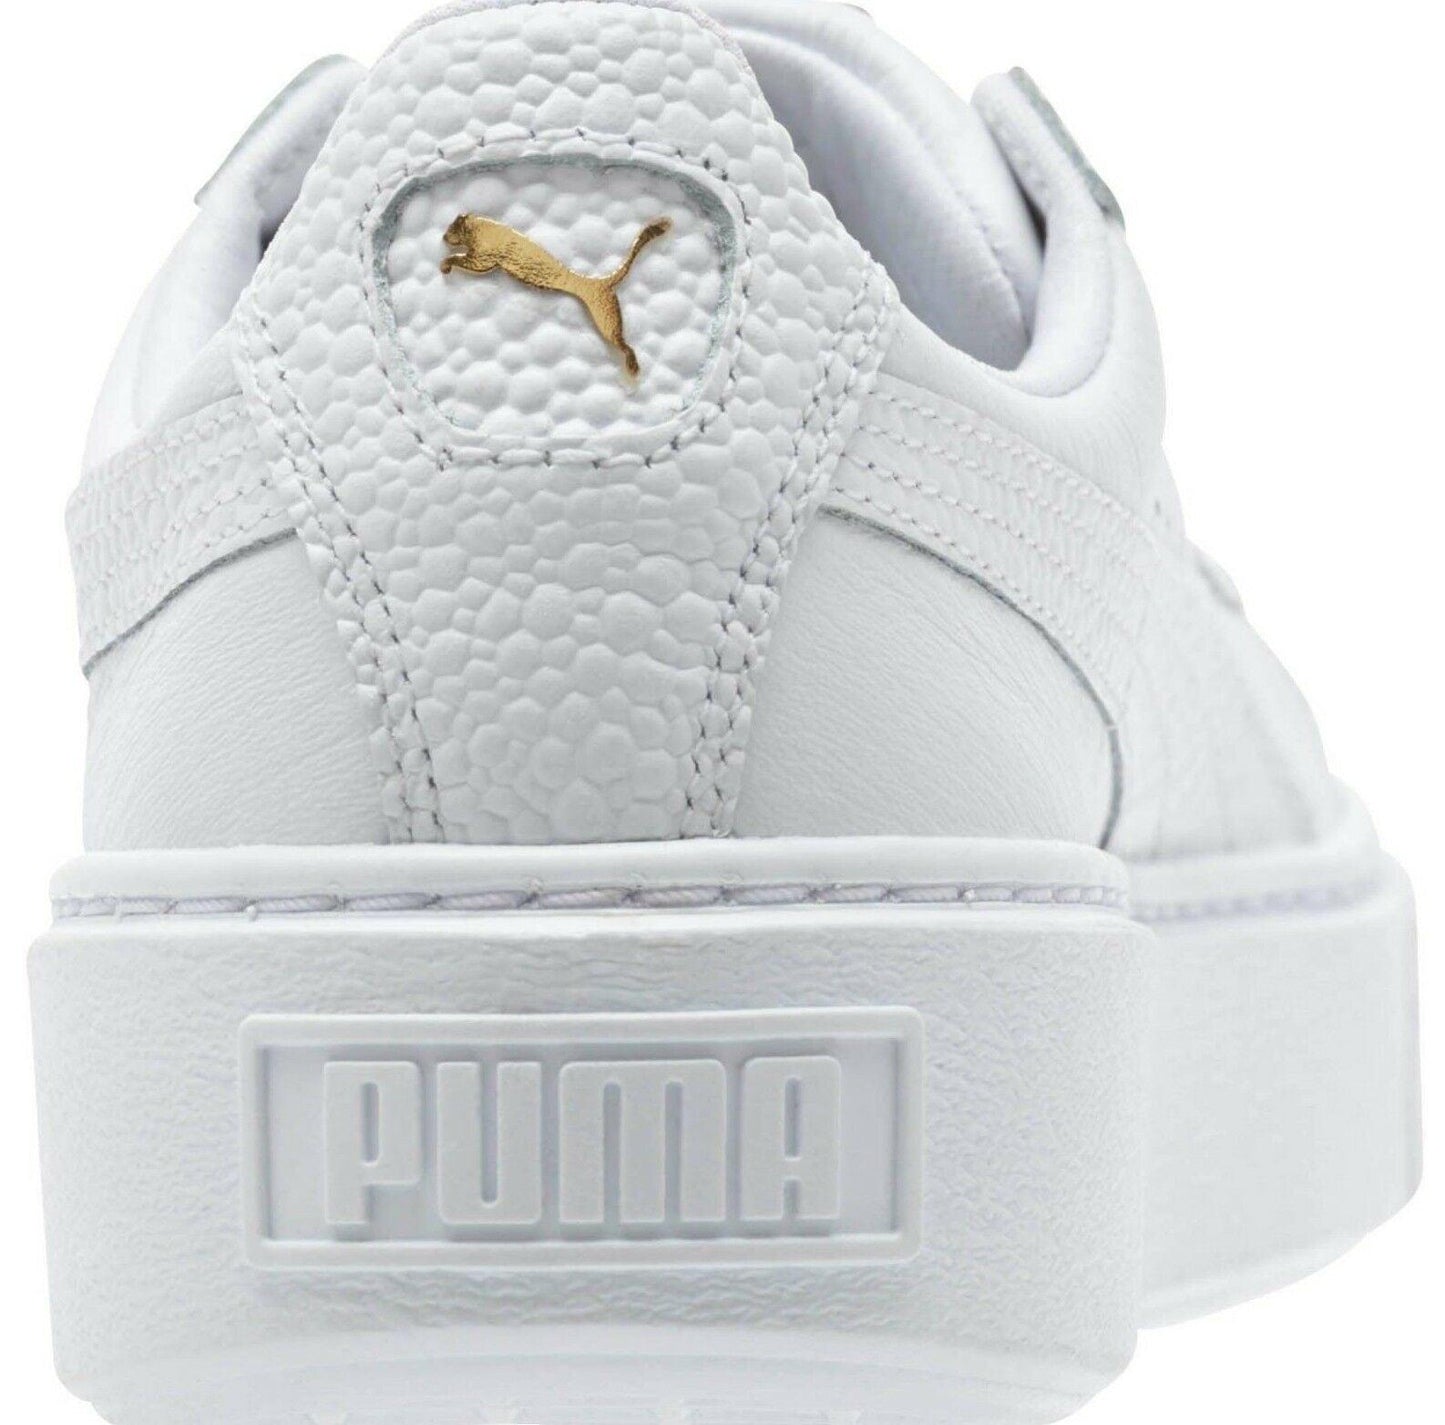 Puma Women's Basket Platform Pearlized 364233-01 White Gold Sneaker US 10.5 - SVNYFancy